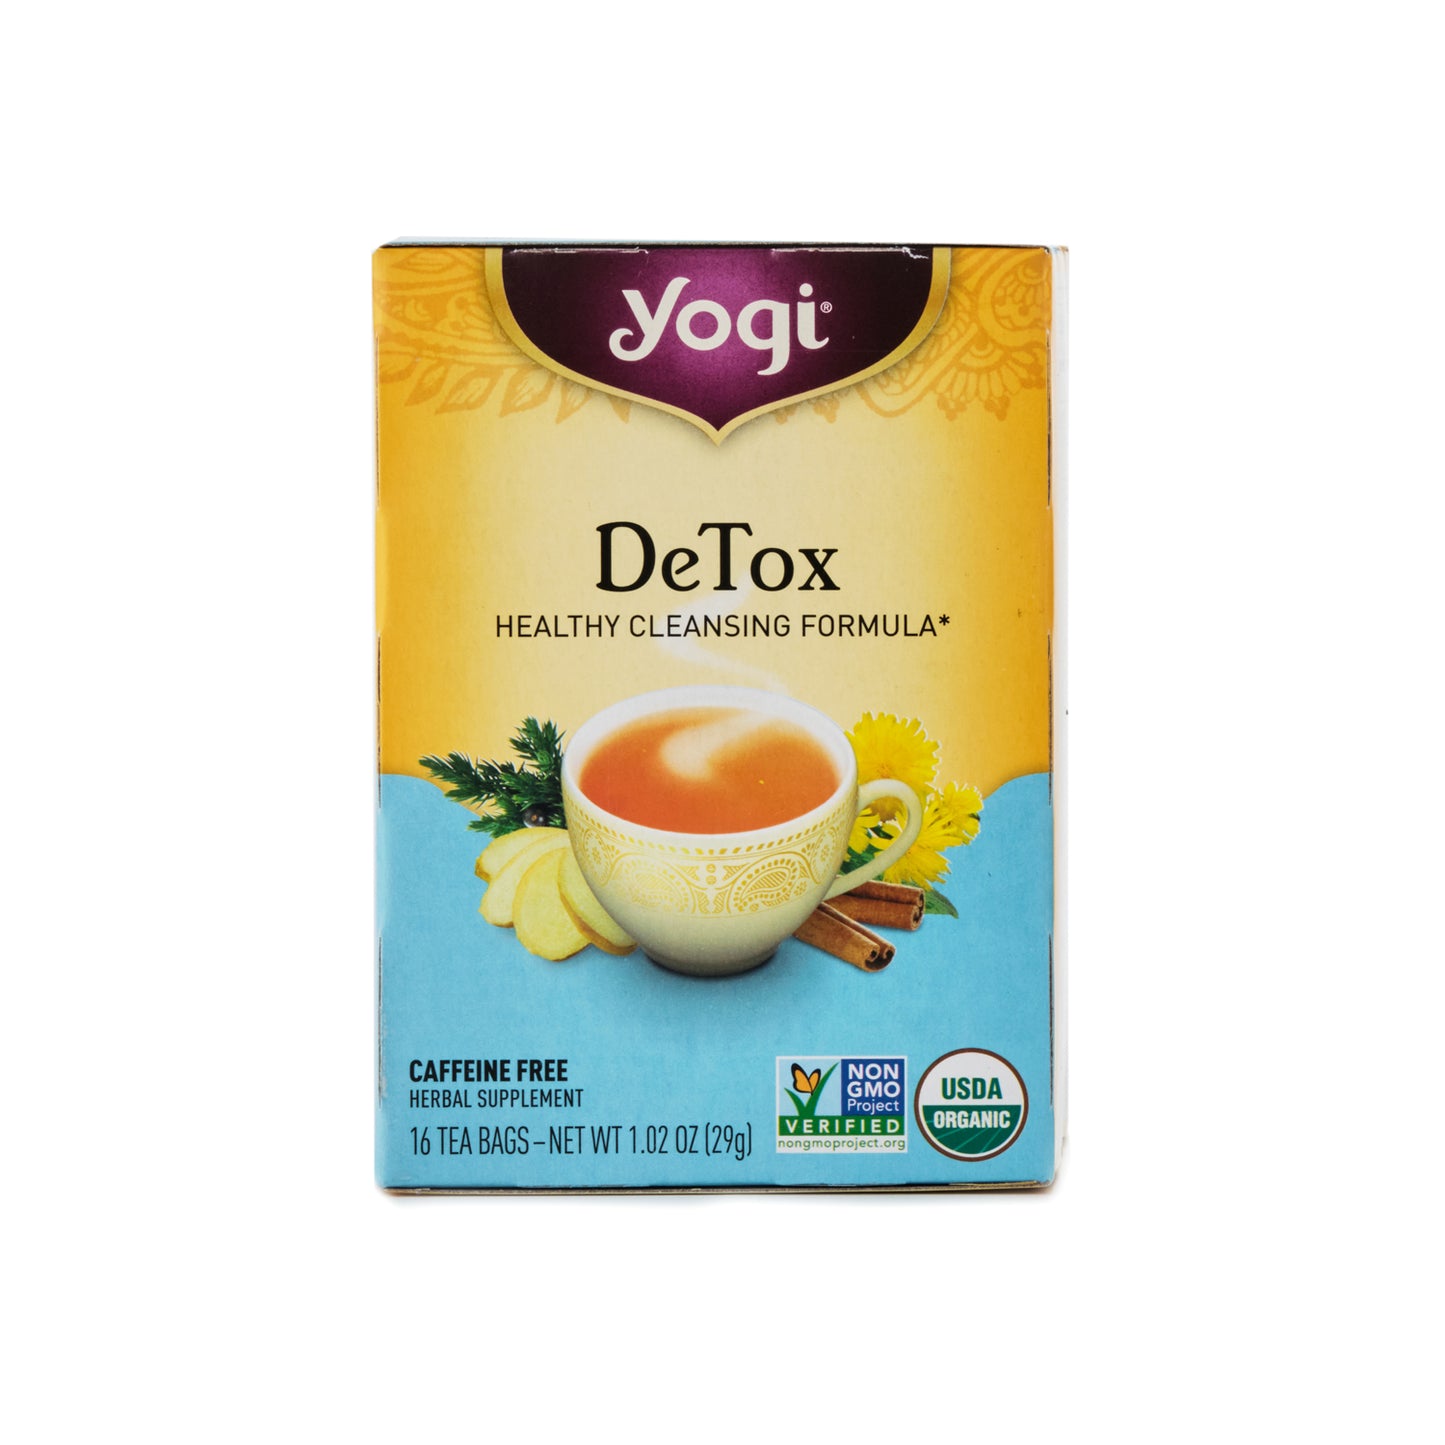 Yogi Detox 16 tea bags